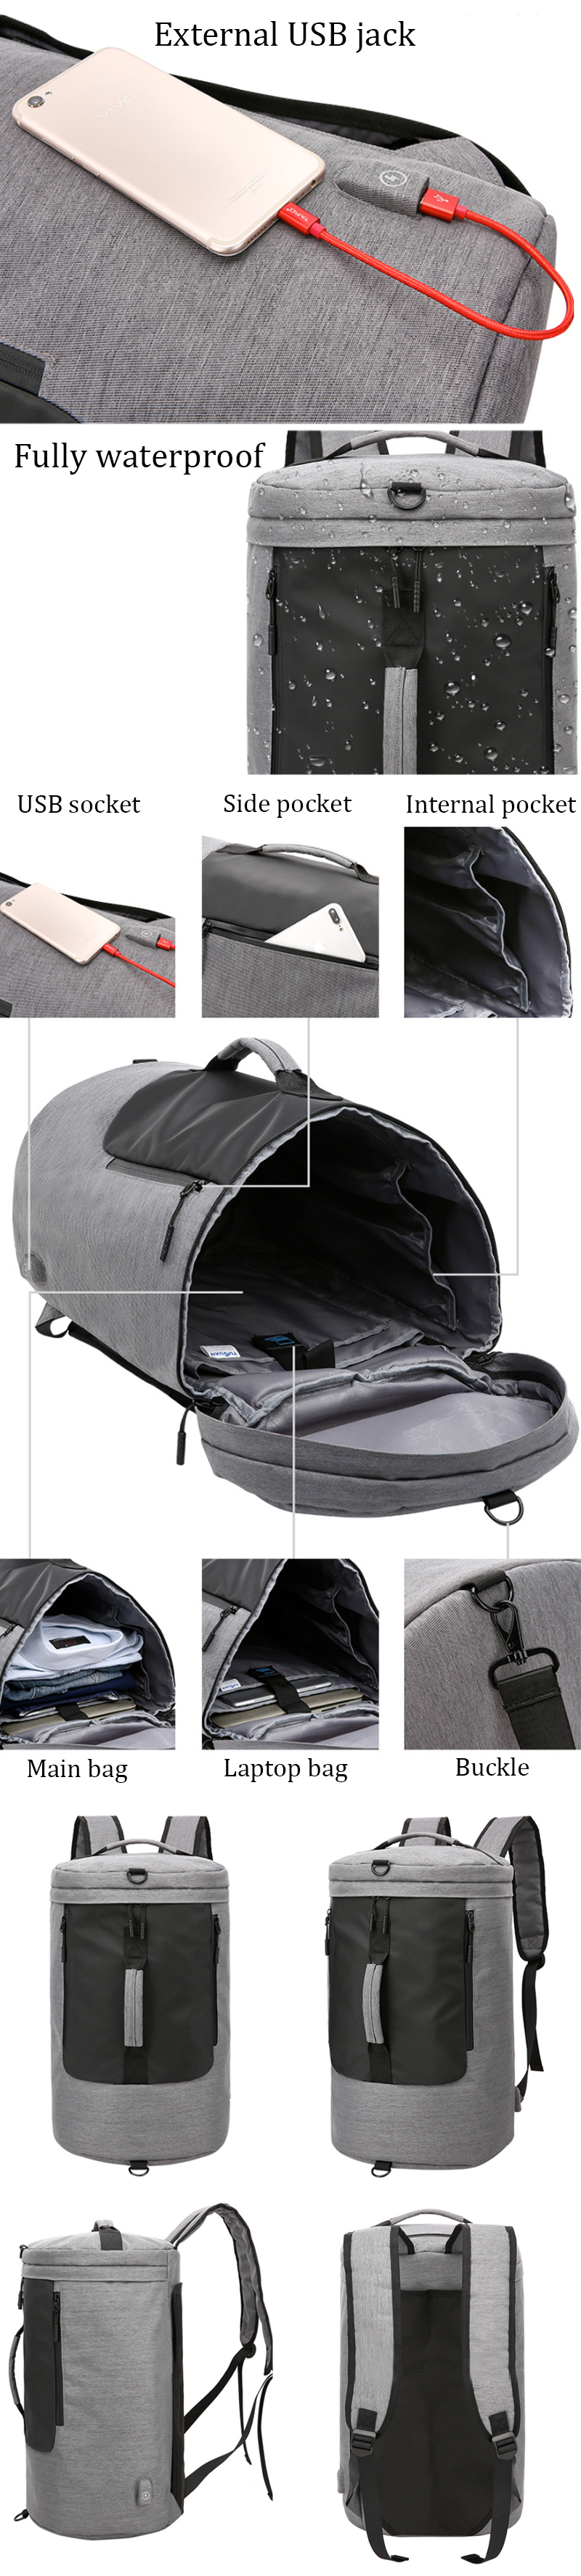 IPReereg-35L-Canvas-USB-Backpack-Outdoor-Travel-Shoulder-Bag-Waterproof-Portable-Luggage-Handbag-1373576-2